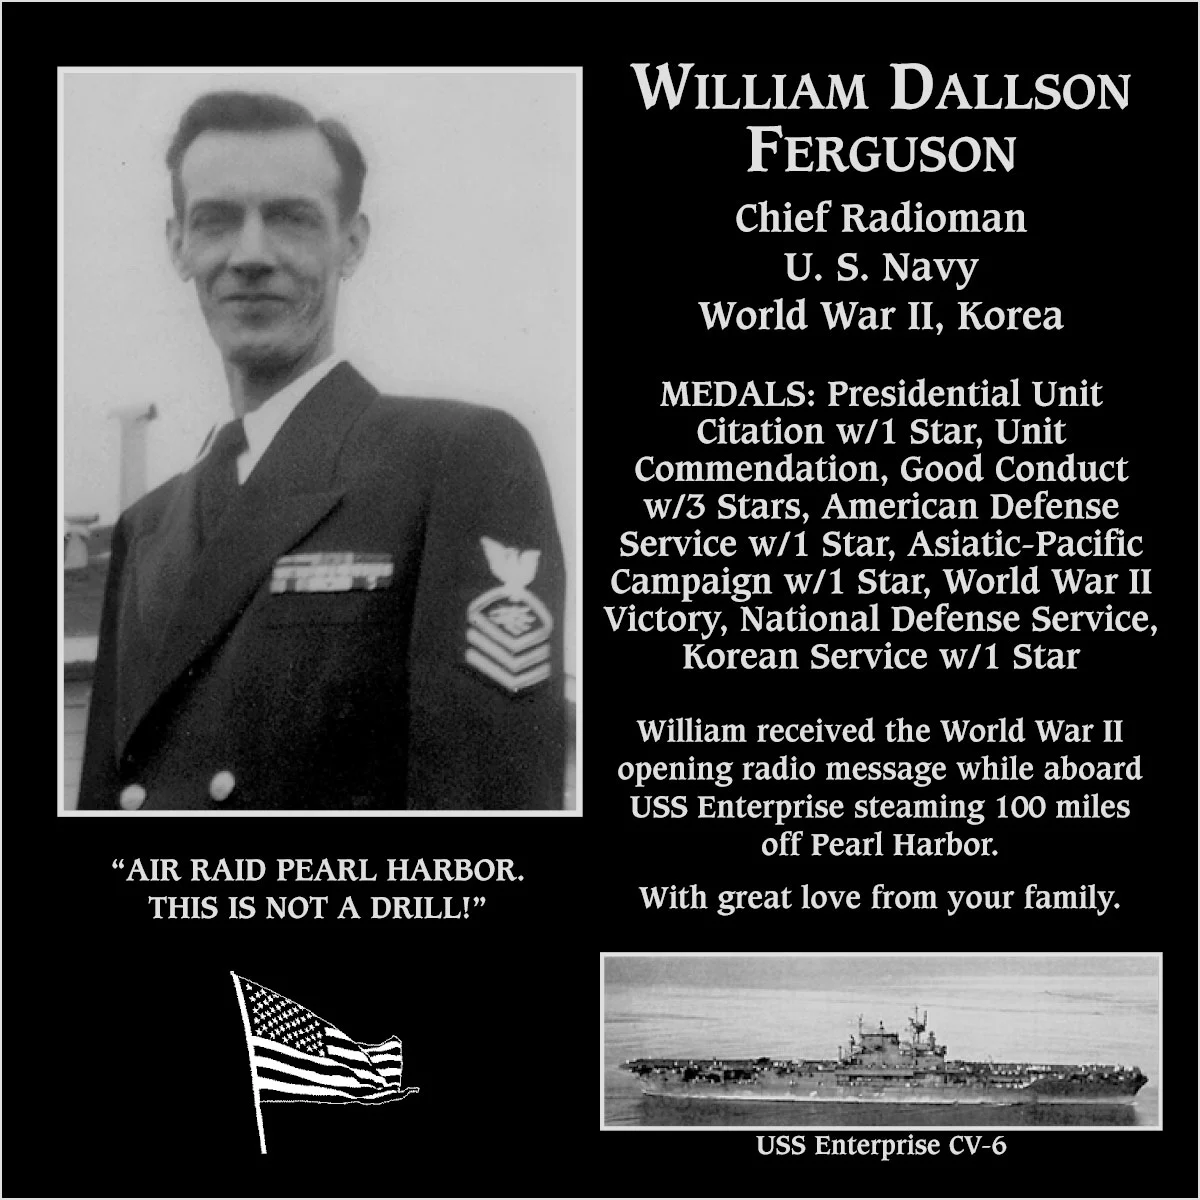 William Dallson Ferguson